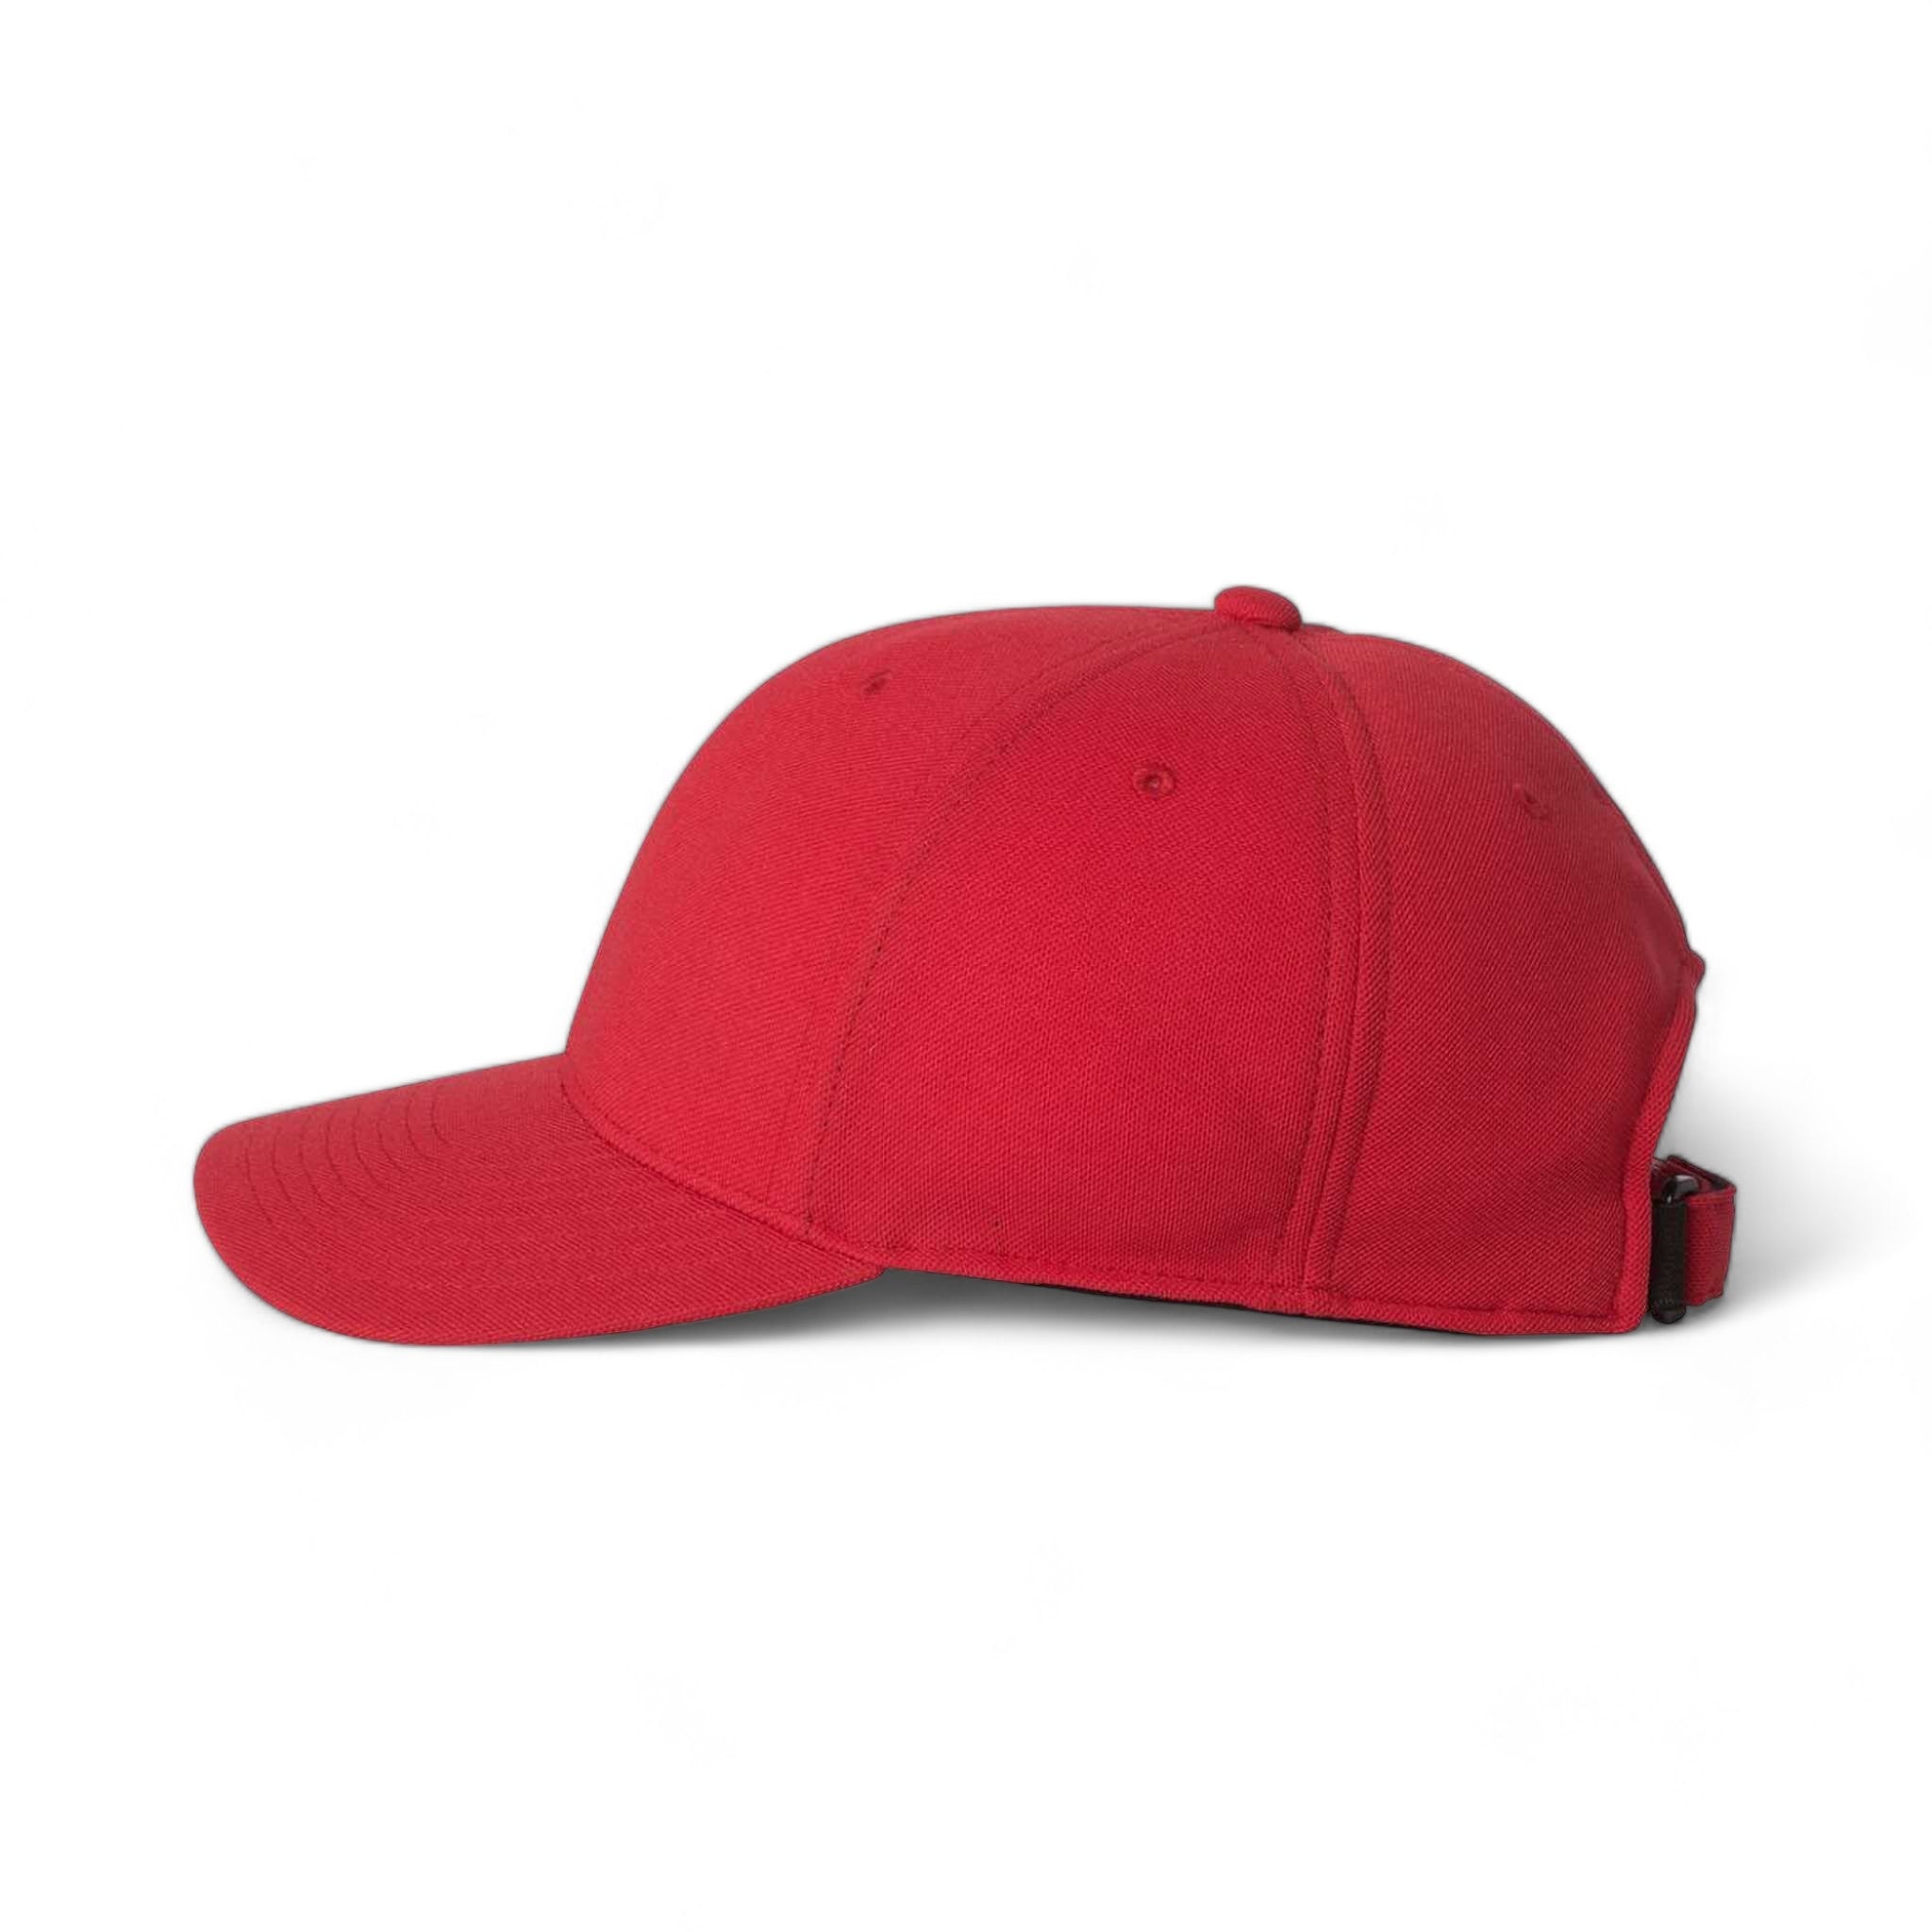 Side view of Flexfit 110P custom hat in red